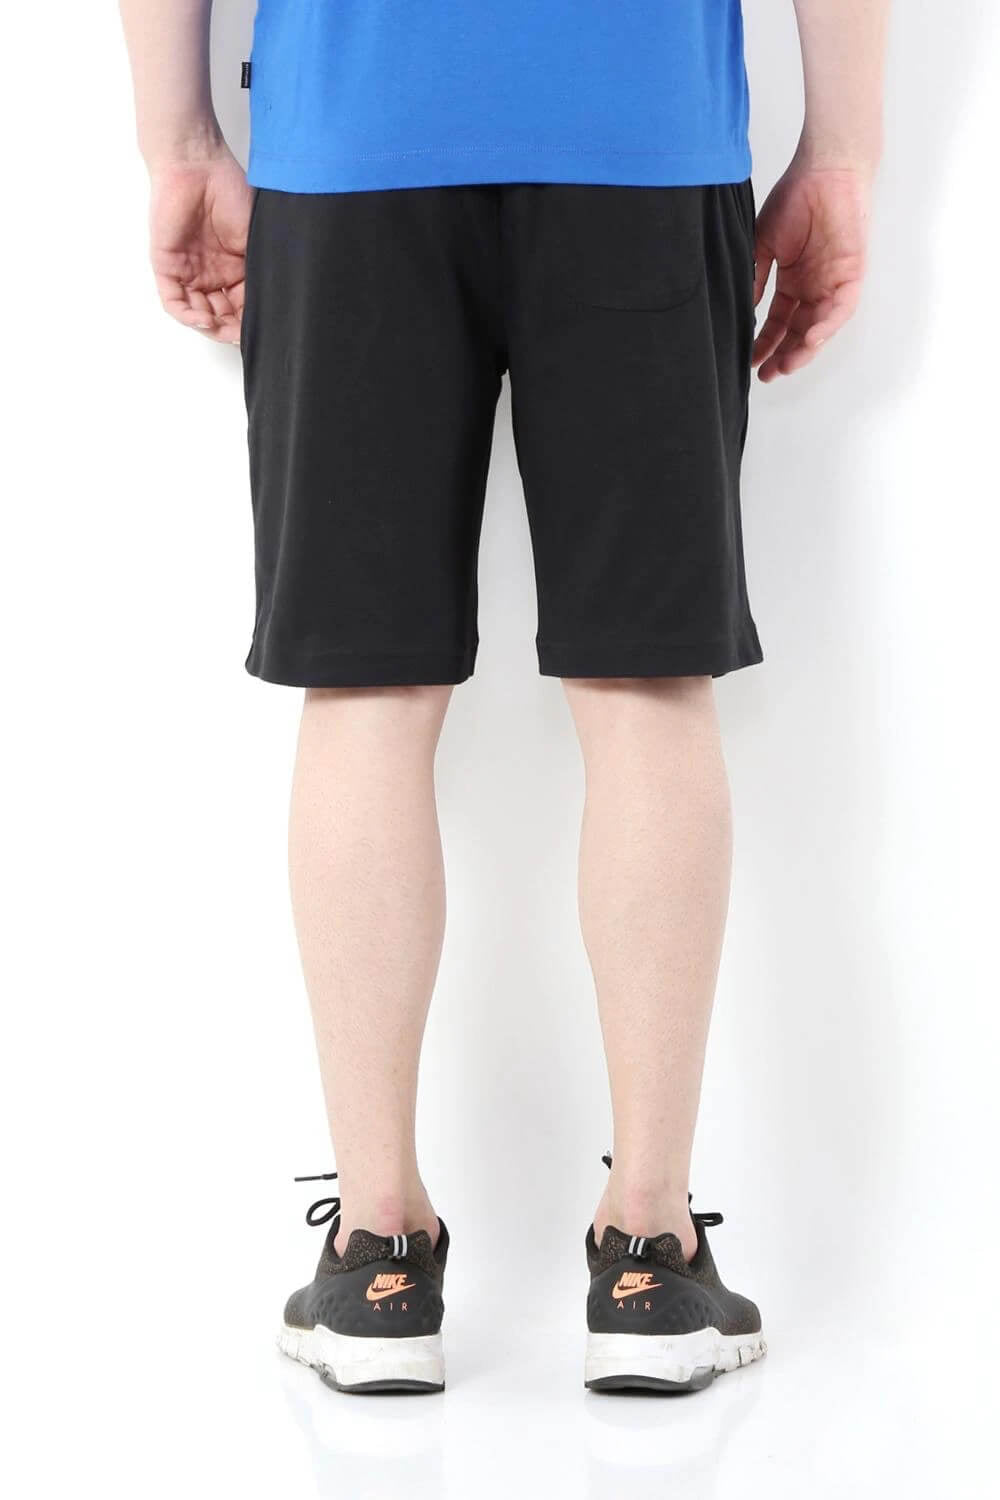 Van Heusen Black Knit Shorts for Men #50002